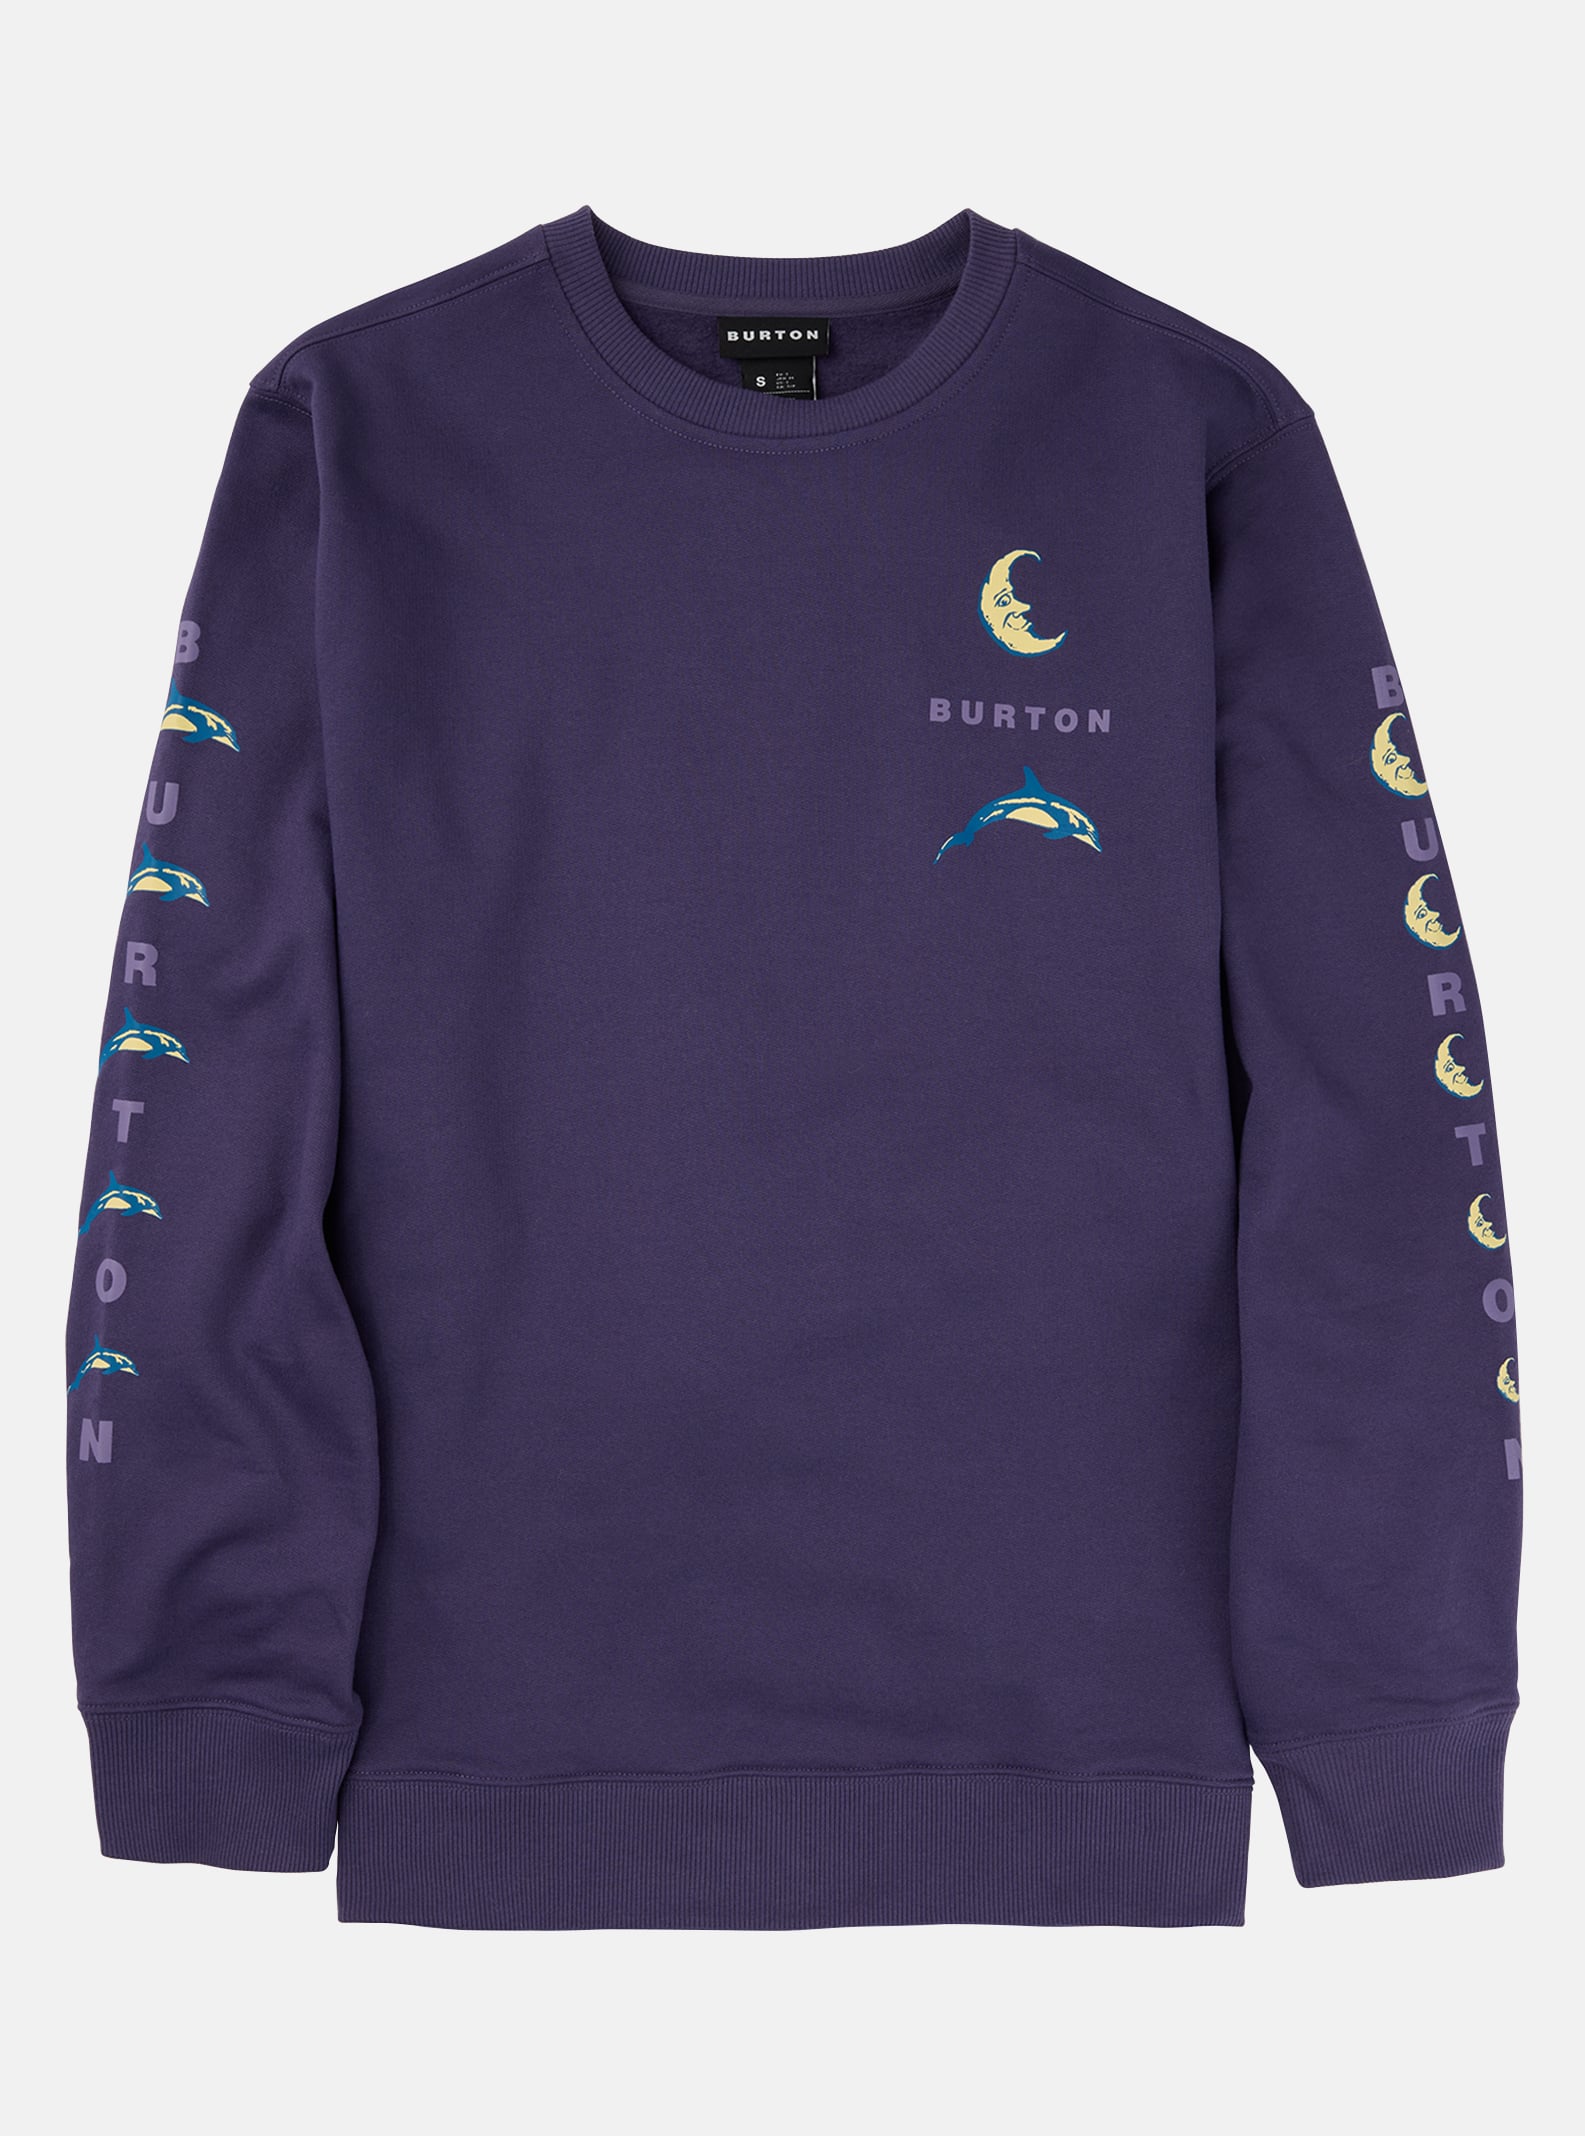 Burton 1996 Dolphin Crew sweatshirt, Violet Halo, XL